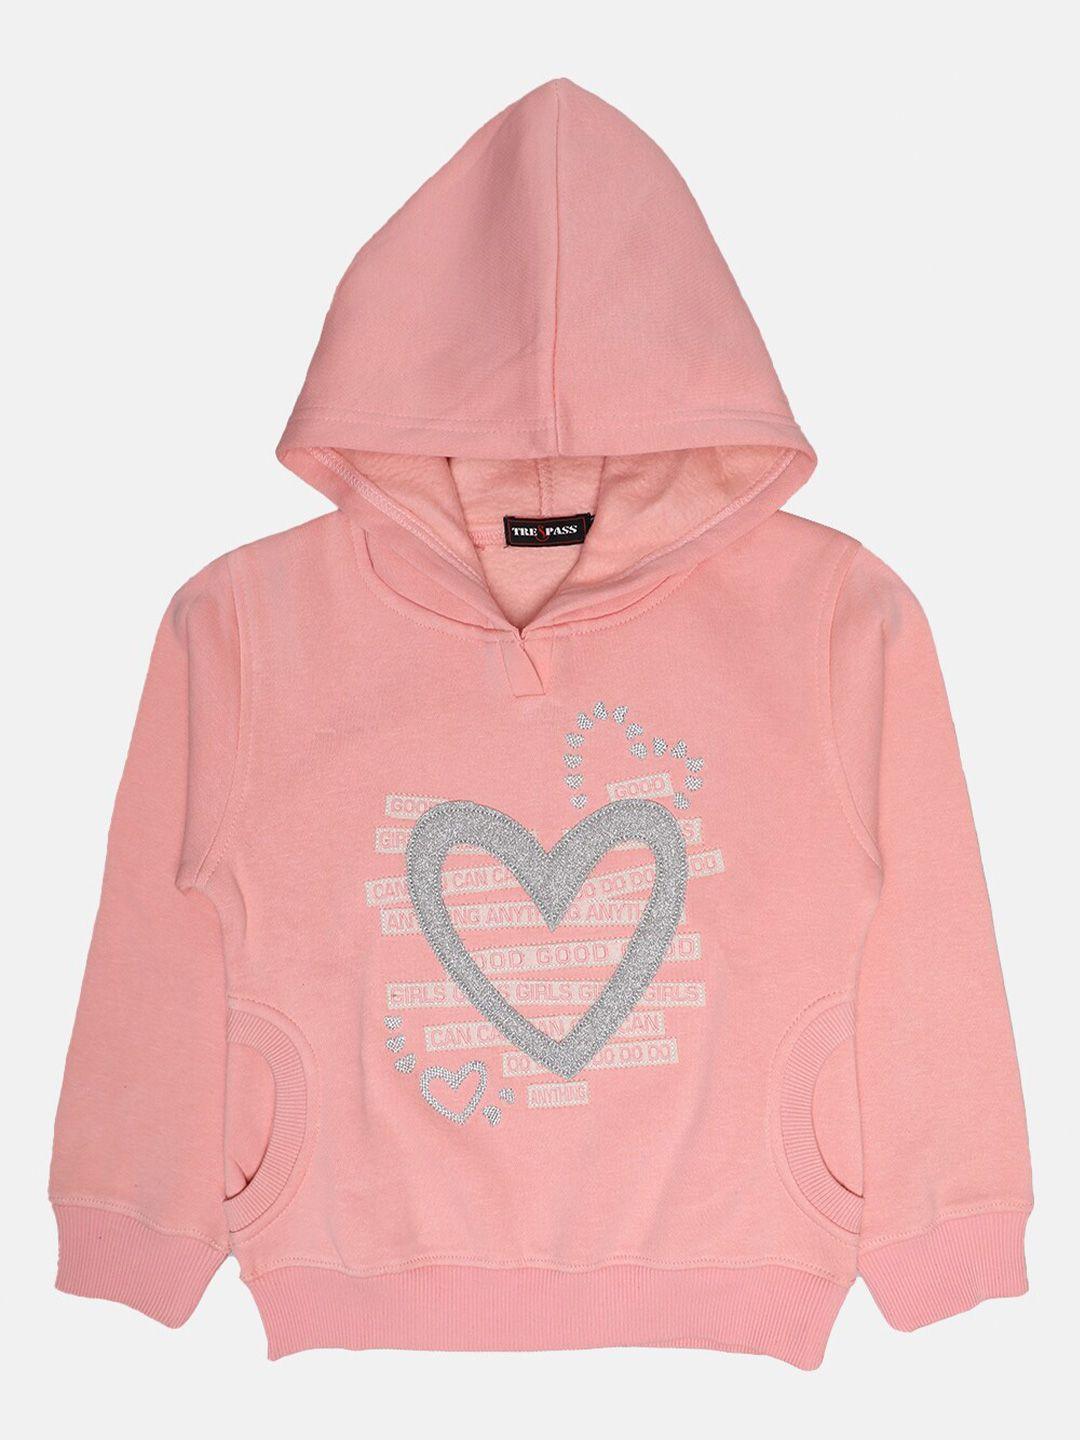 tre&pass-boys-peach-coloured-printed-hooded-sweatshirt